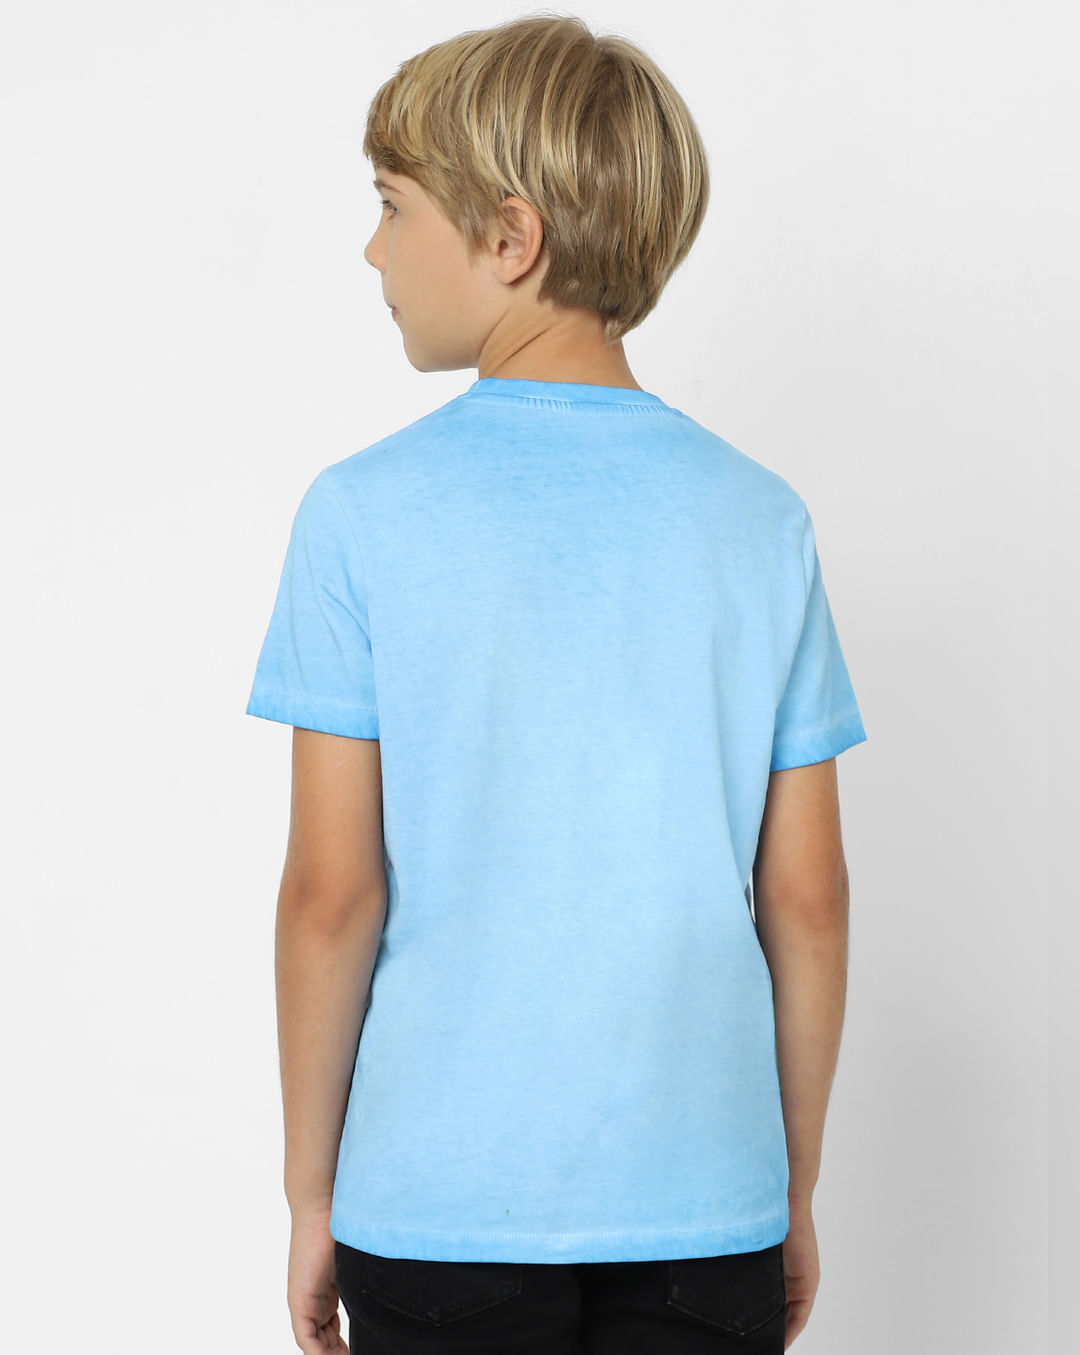 Buy Boys Blue Printed Crew Neck T-shirt Online at Jack & Jones